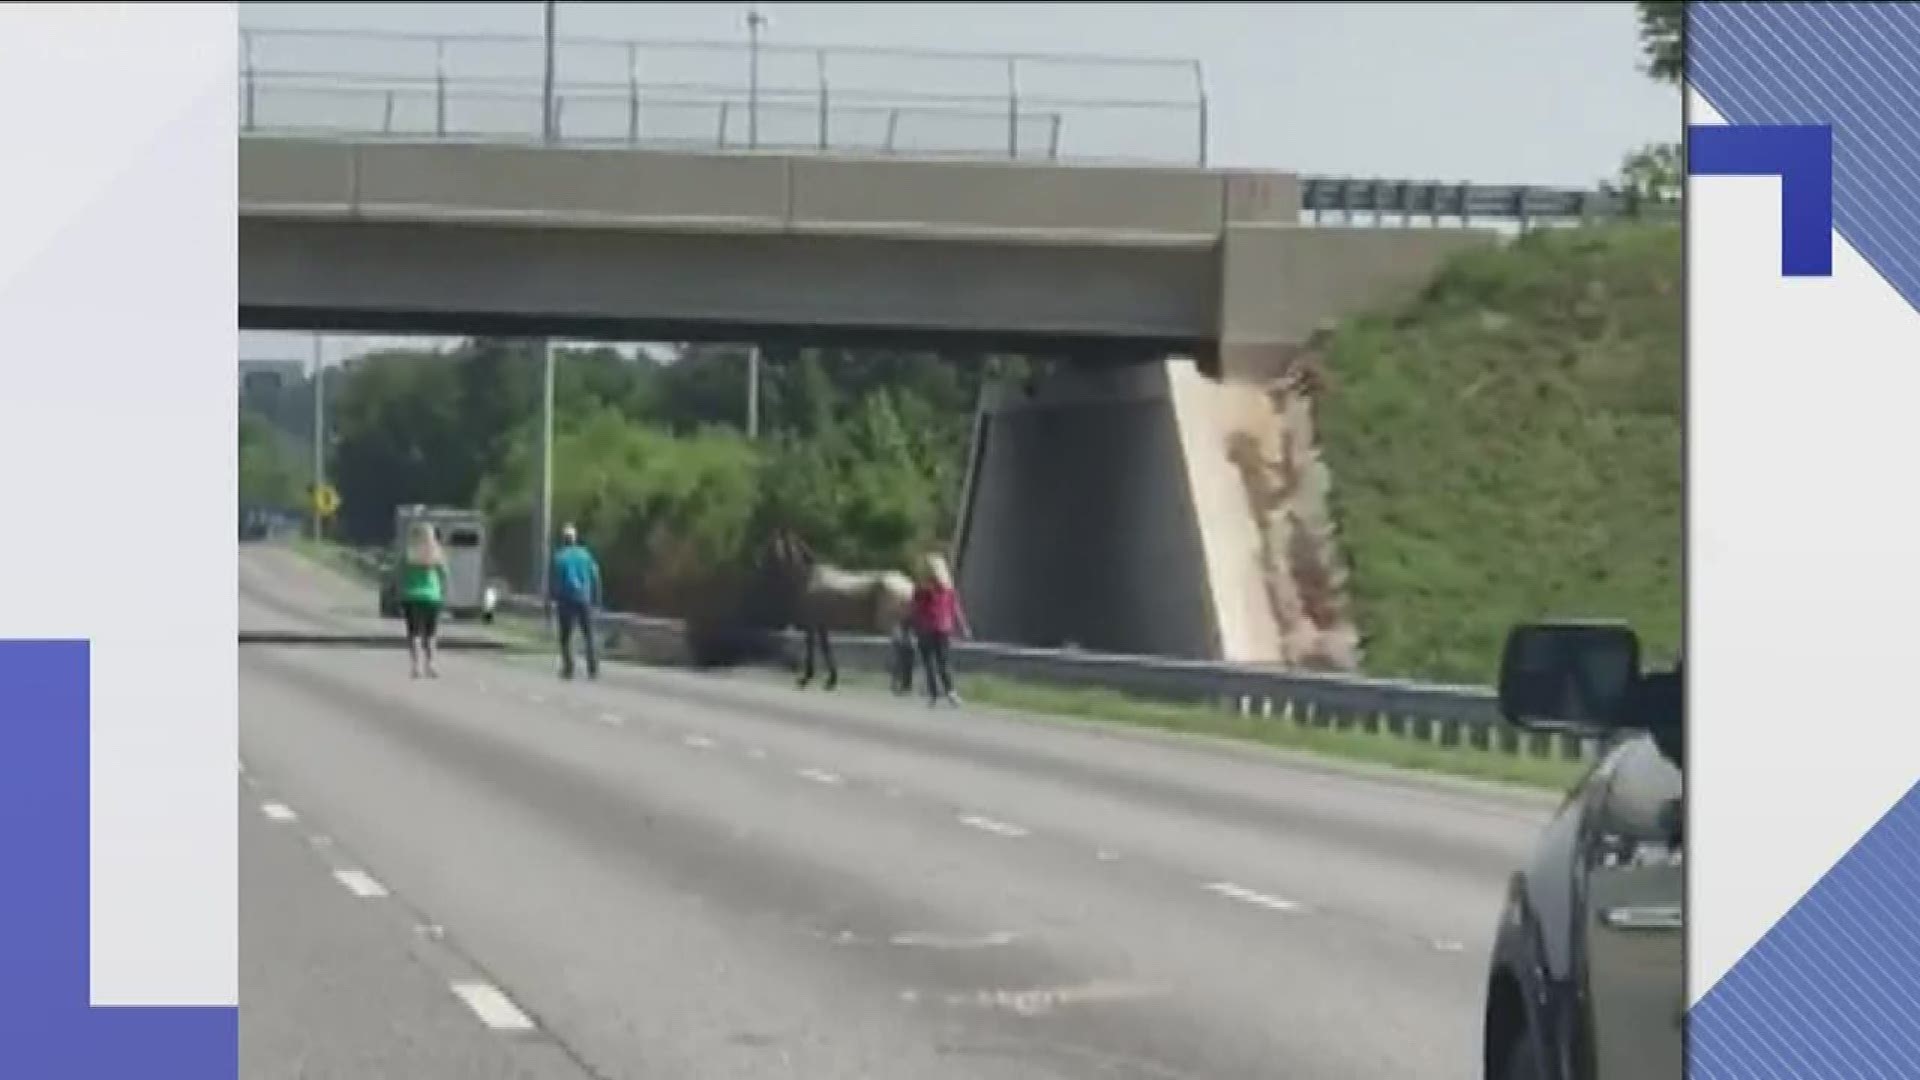 Parts of I-75 near Calhoun felt like a rodeo, Sunday after a runaway horse escaped its trailer.